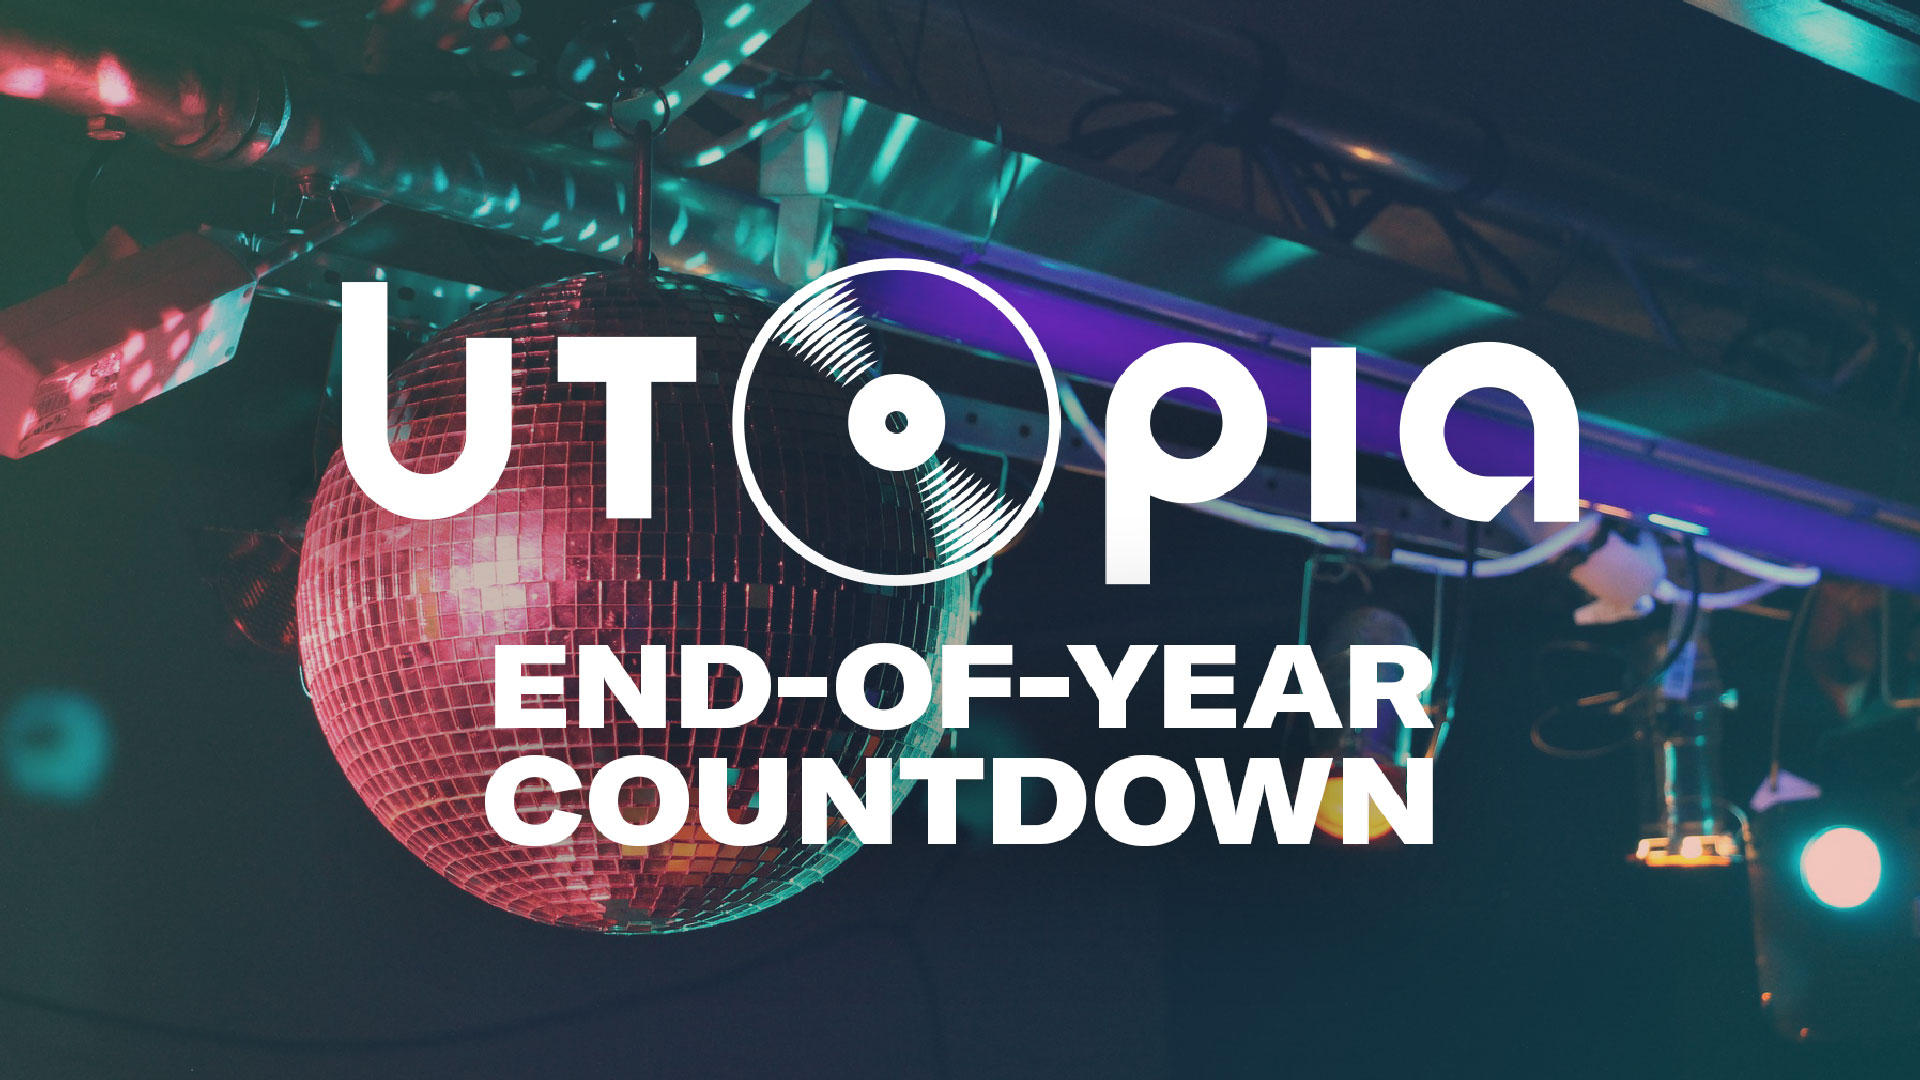 SiriusXM Utopia End-of-Year Countdown